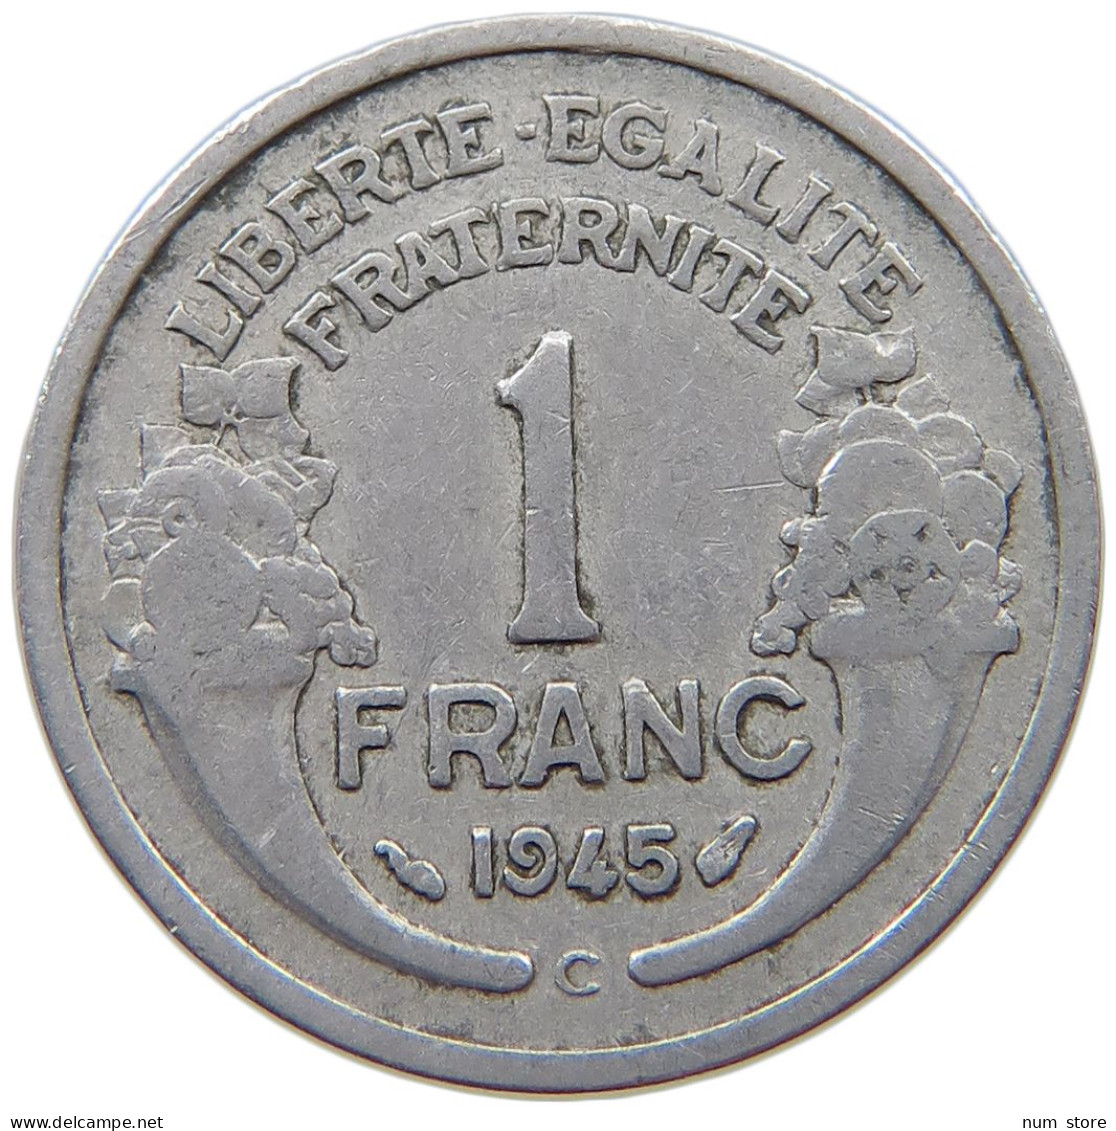 FRANCE 1 FRANC 1945 C #s069 0239 - 1 Franc